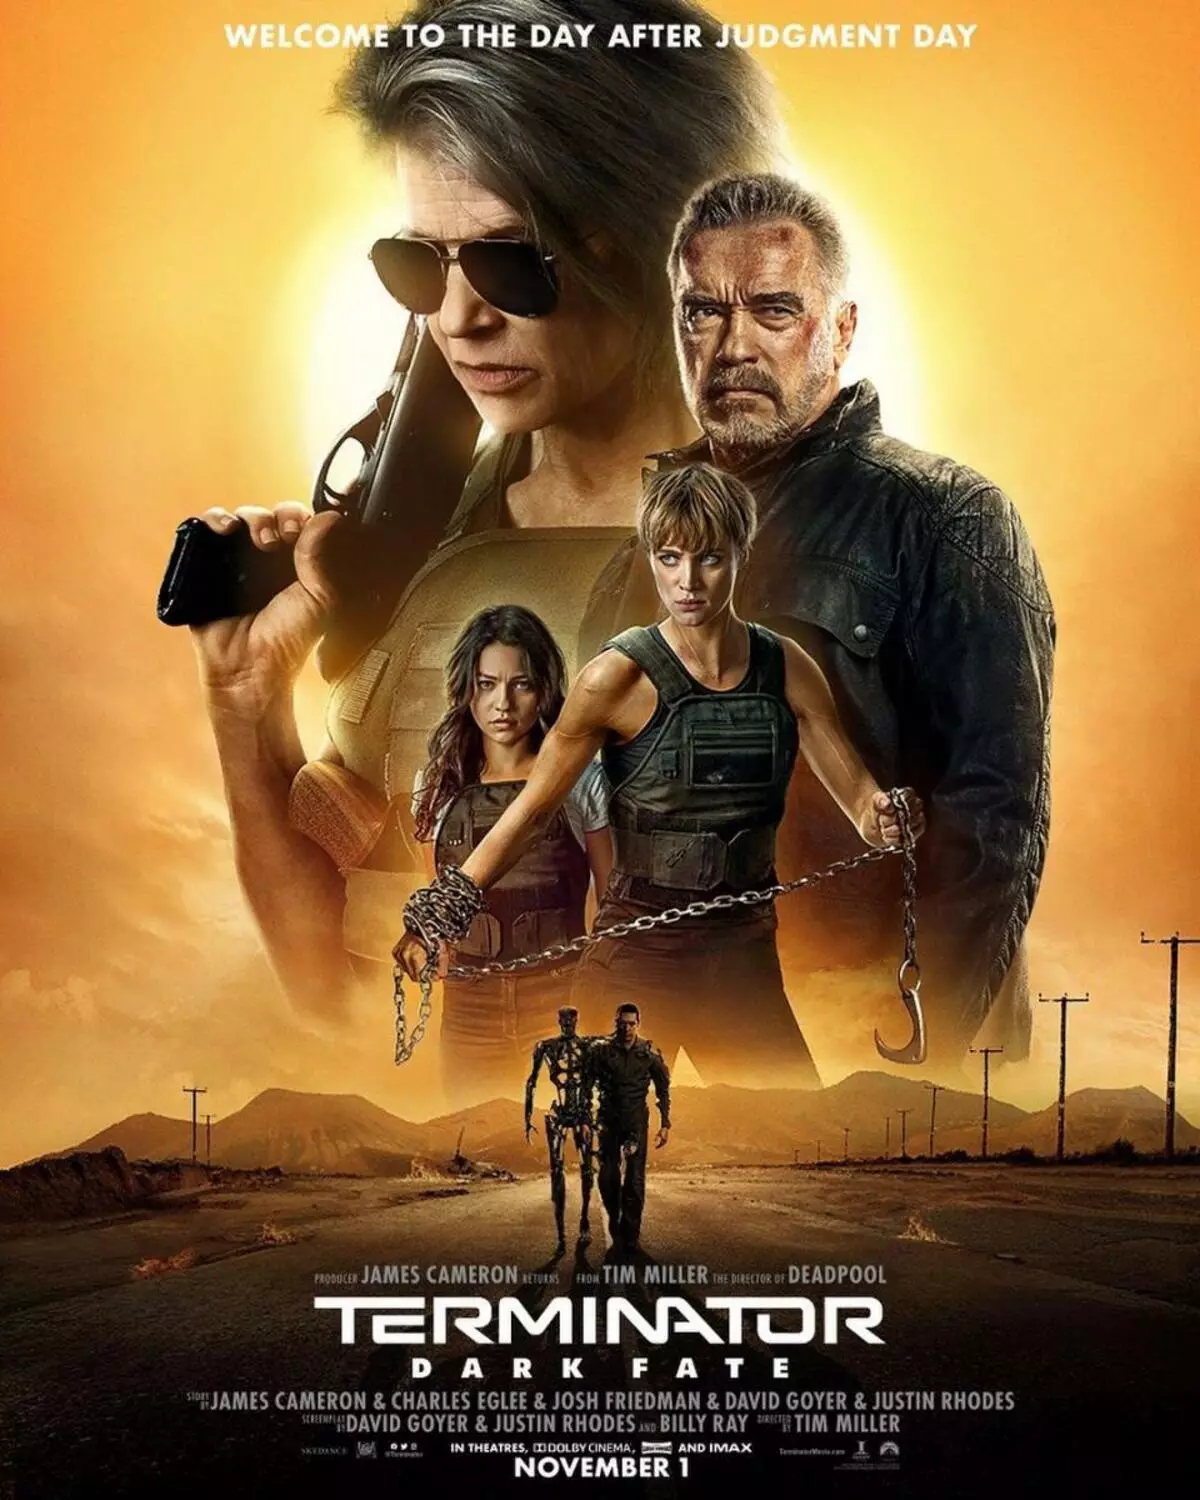 Terminatorchefen vill inte arbeta med James Cameron: 